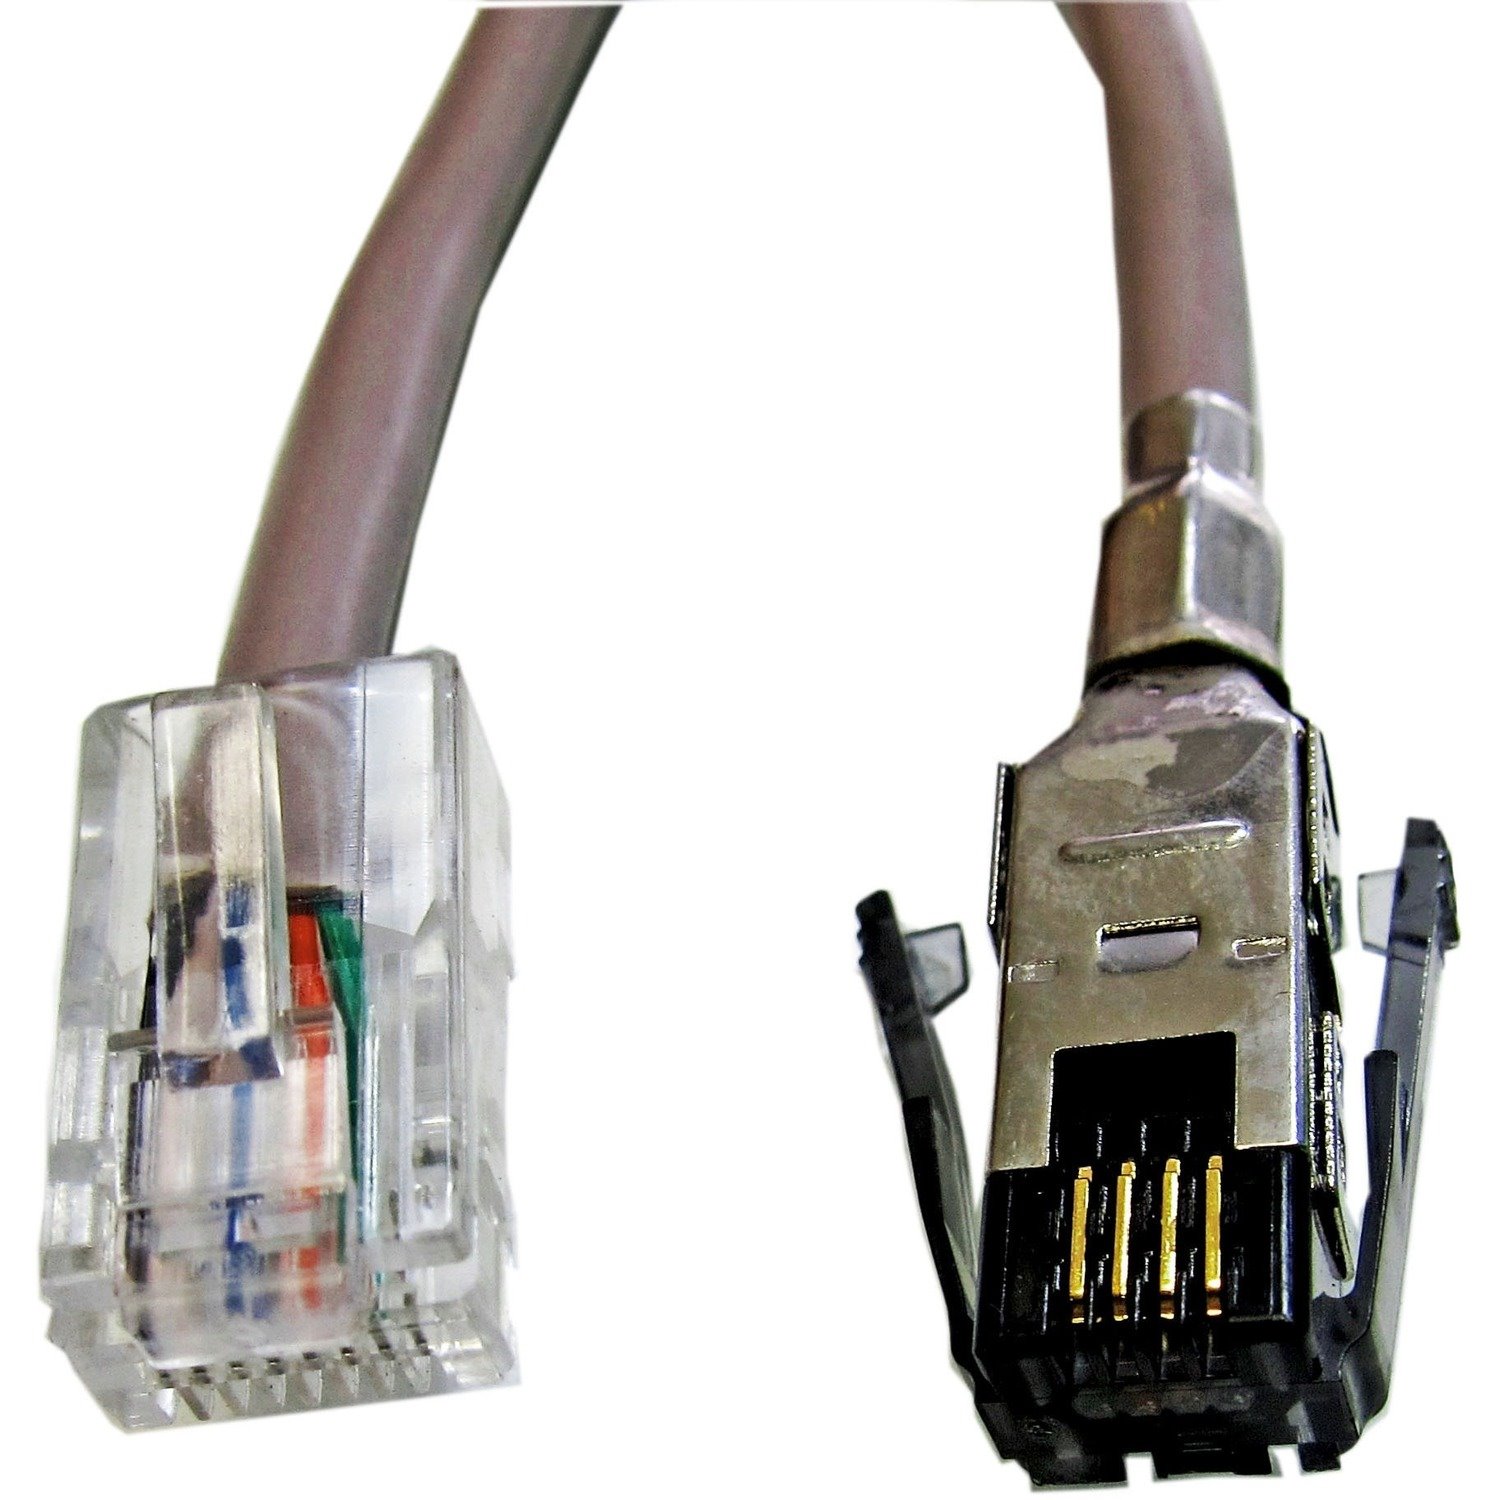 apg 1.52 m RJ-45/Molex Data Transfer Cable for Cash Drawer